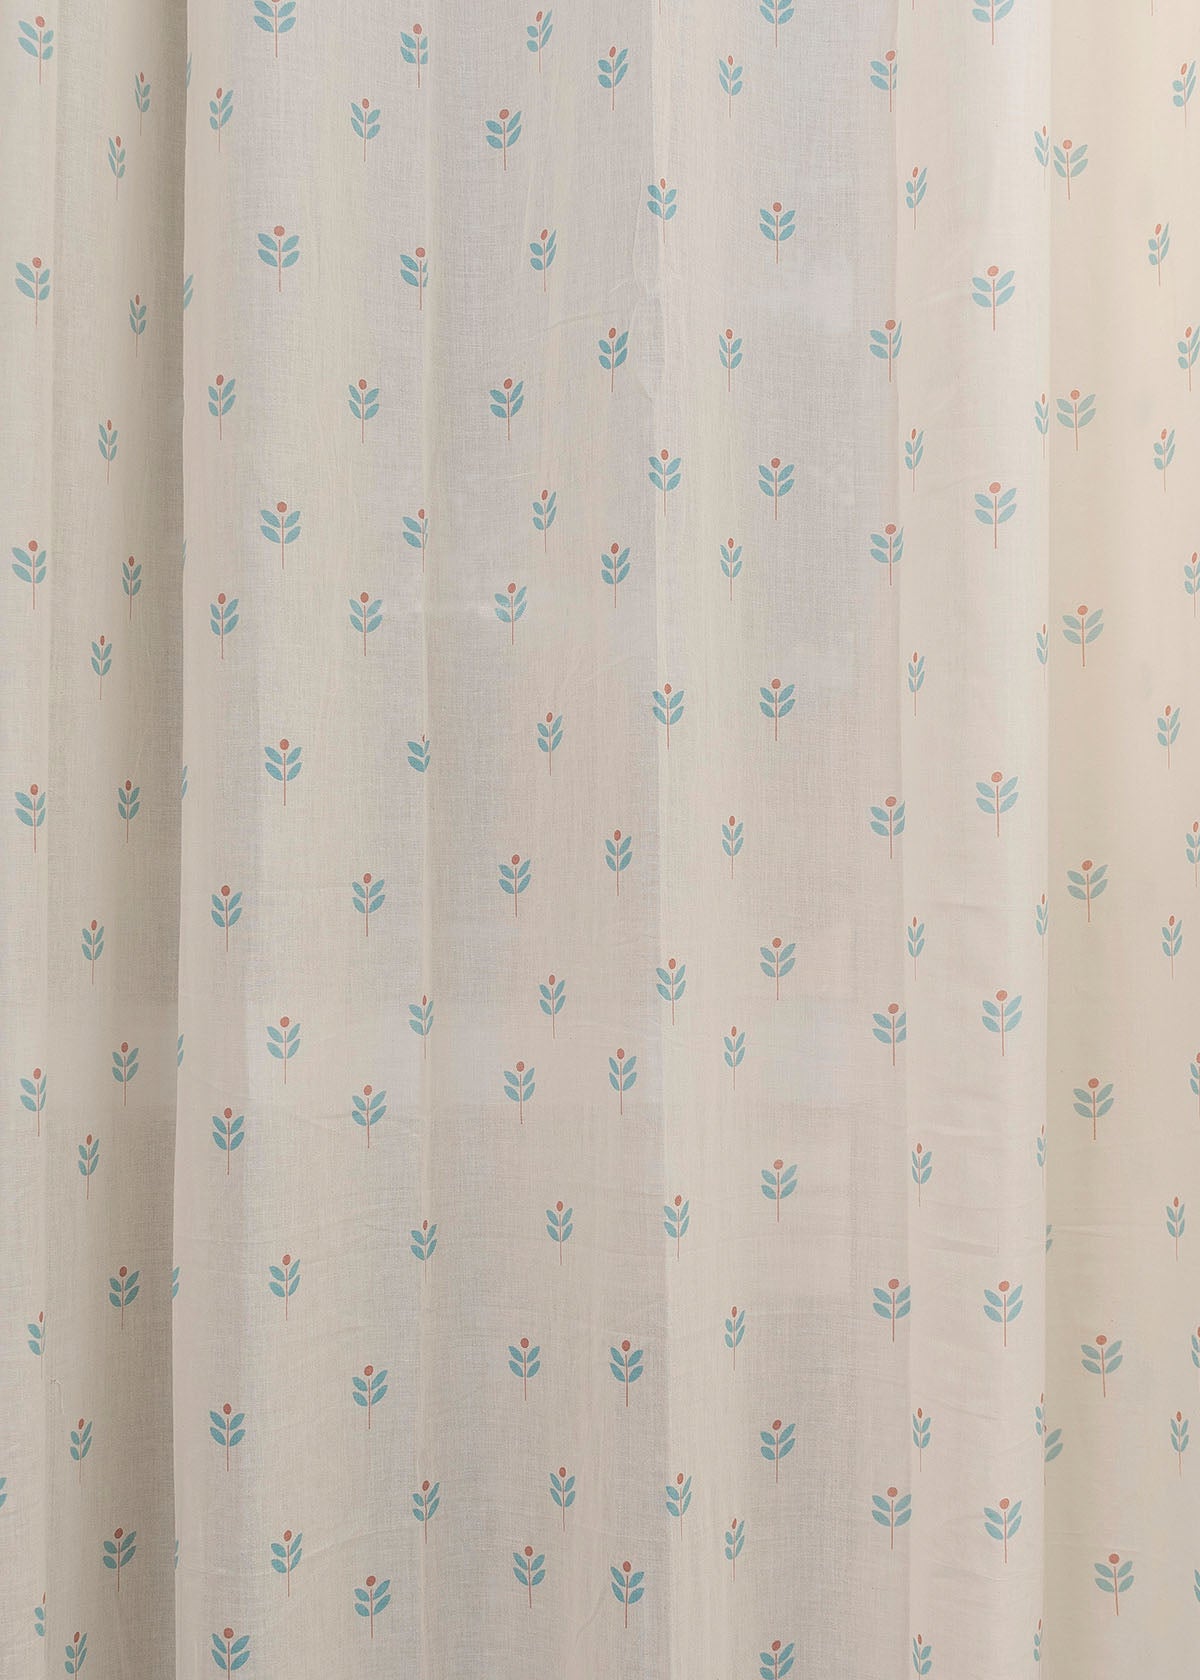 Sapling Printed Sheer Curtain - Nile Blue